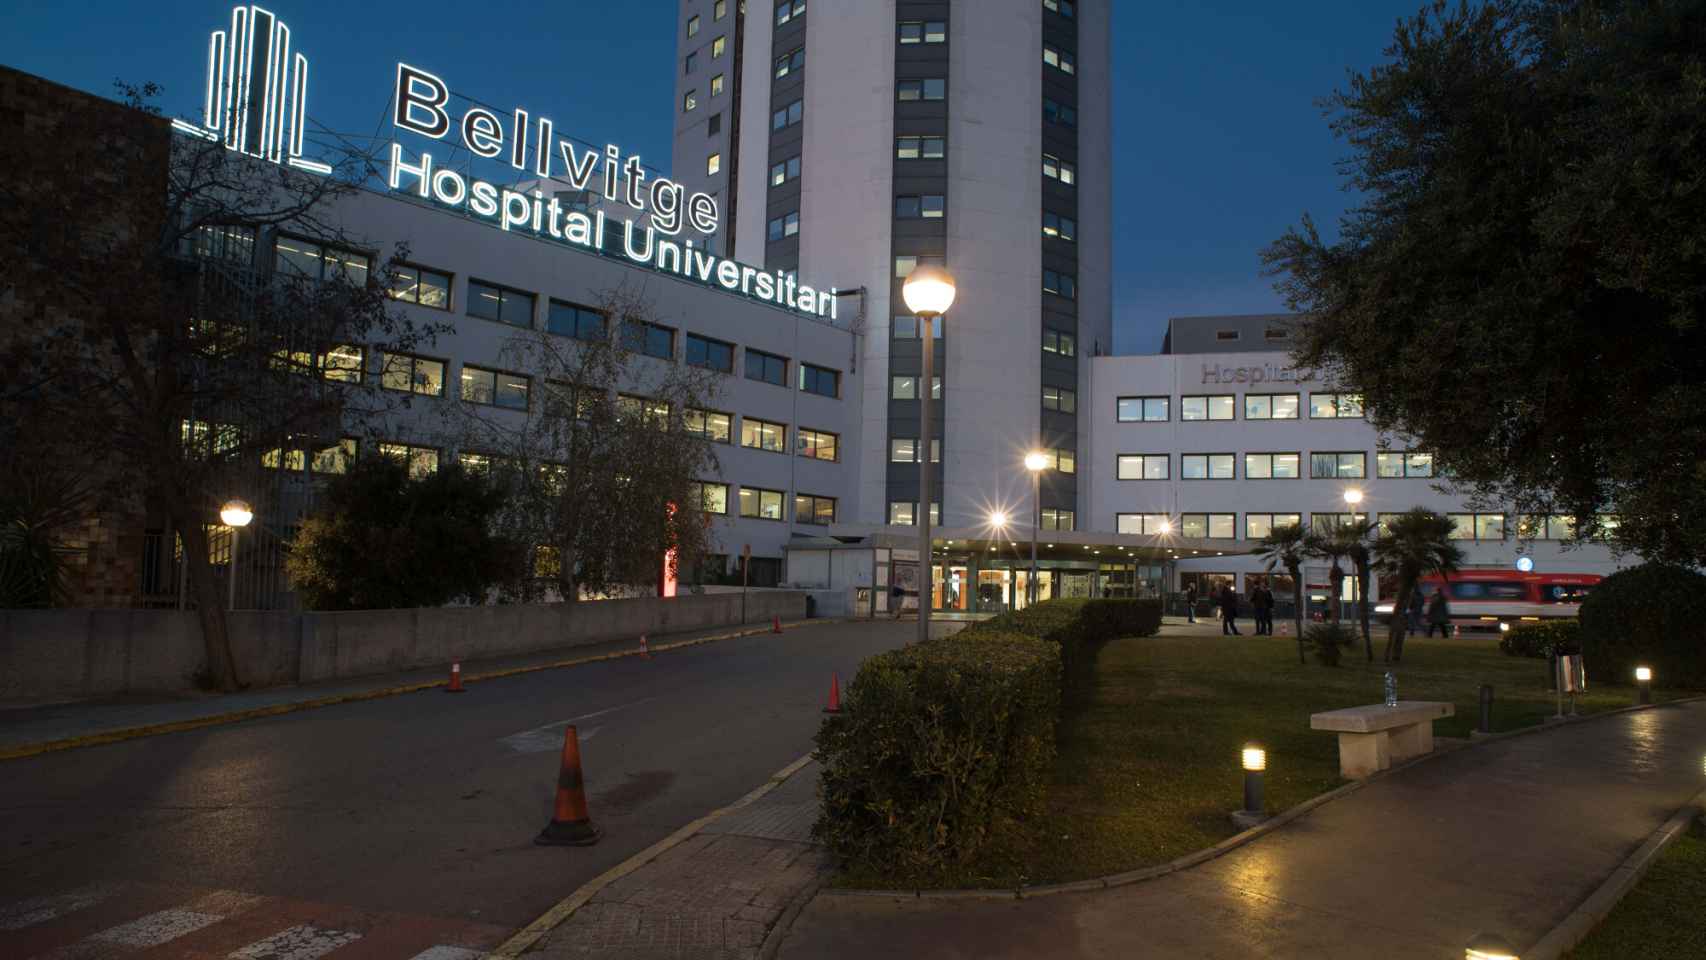 Hospital Universitario Bellvitge.